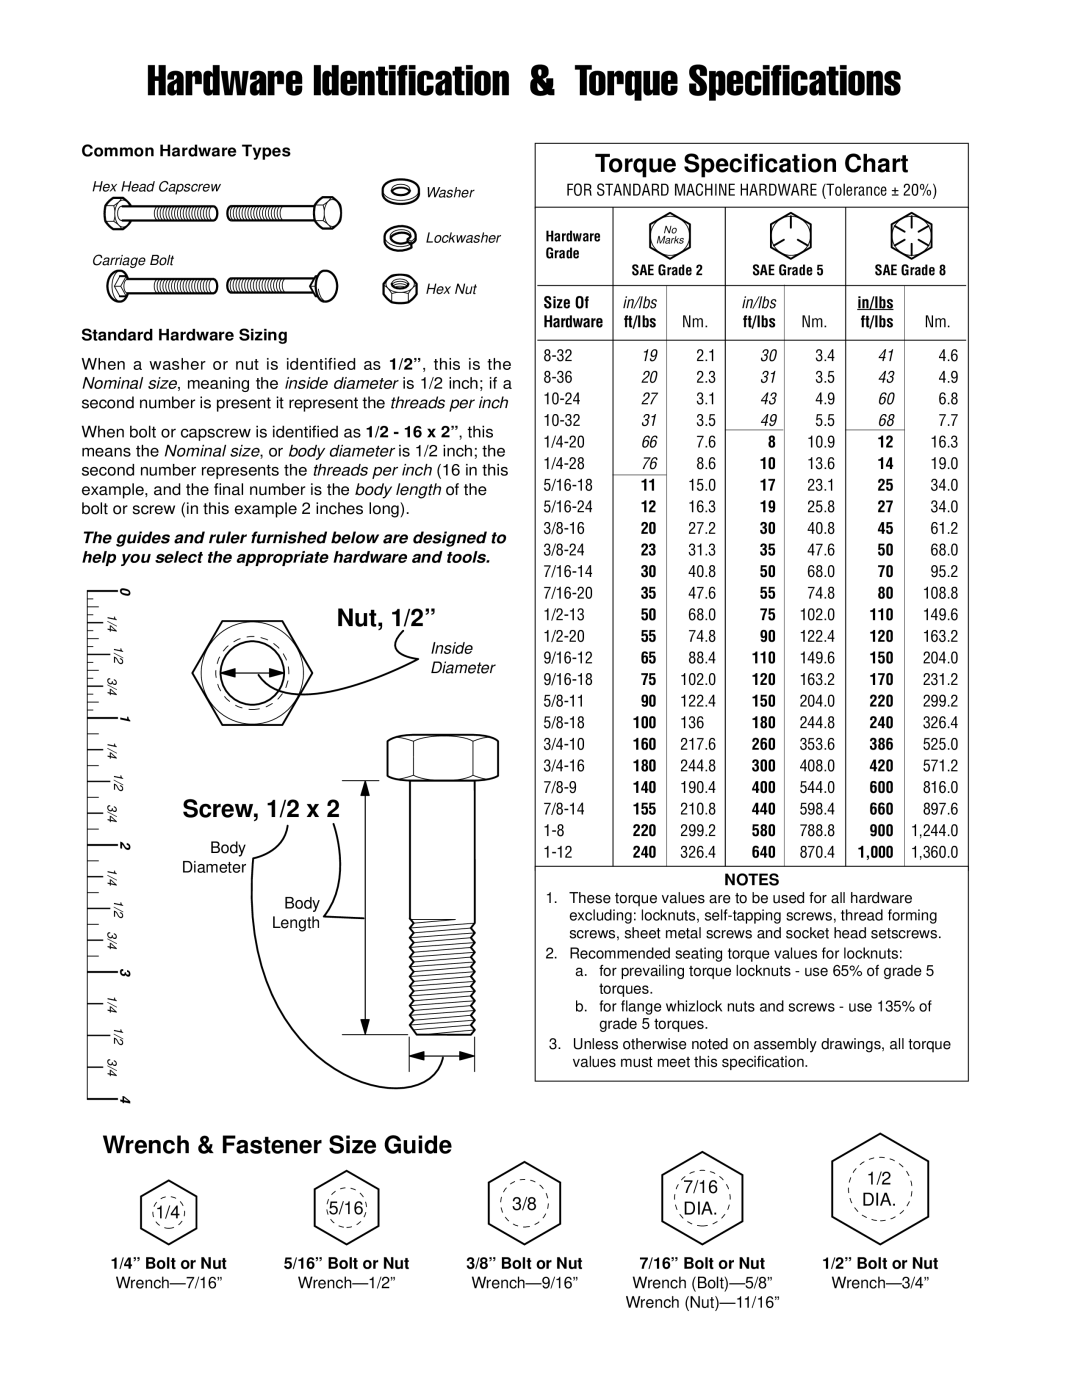 Simplicity 1692149 Hardware Identification & Torque Specifications, Torque Specification Chart, Nut, 1/2”, Screw, 1/2 